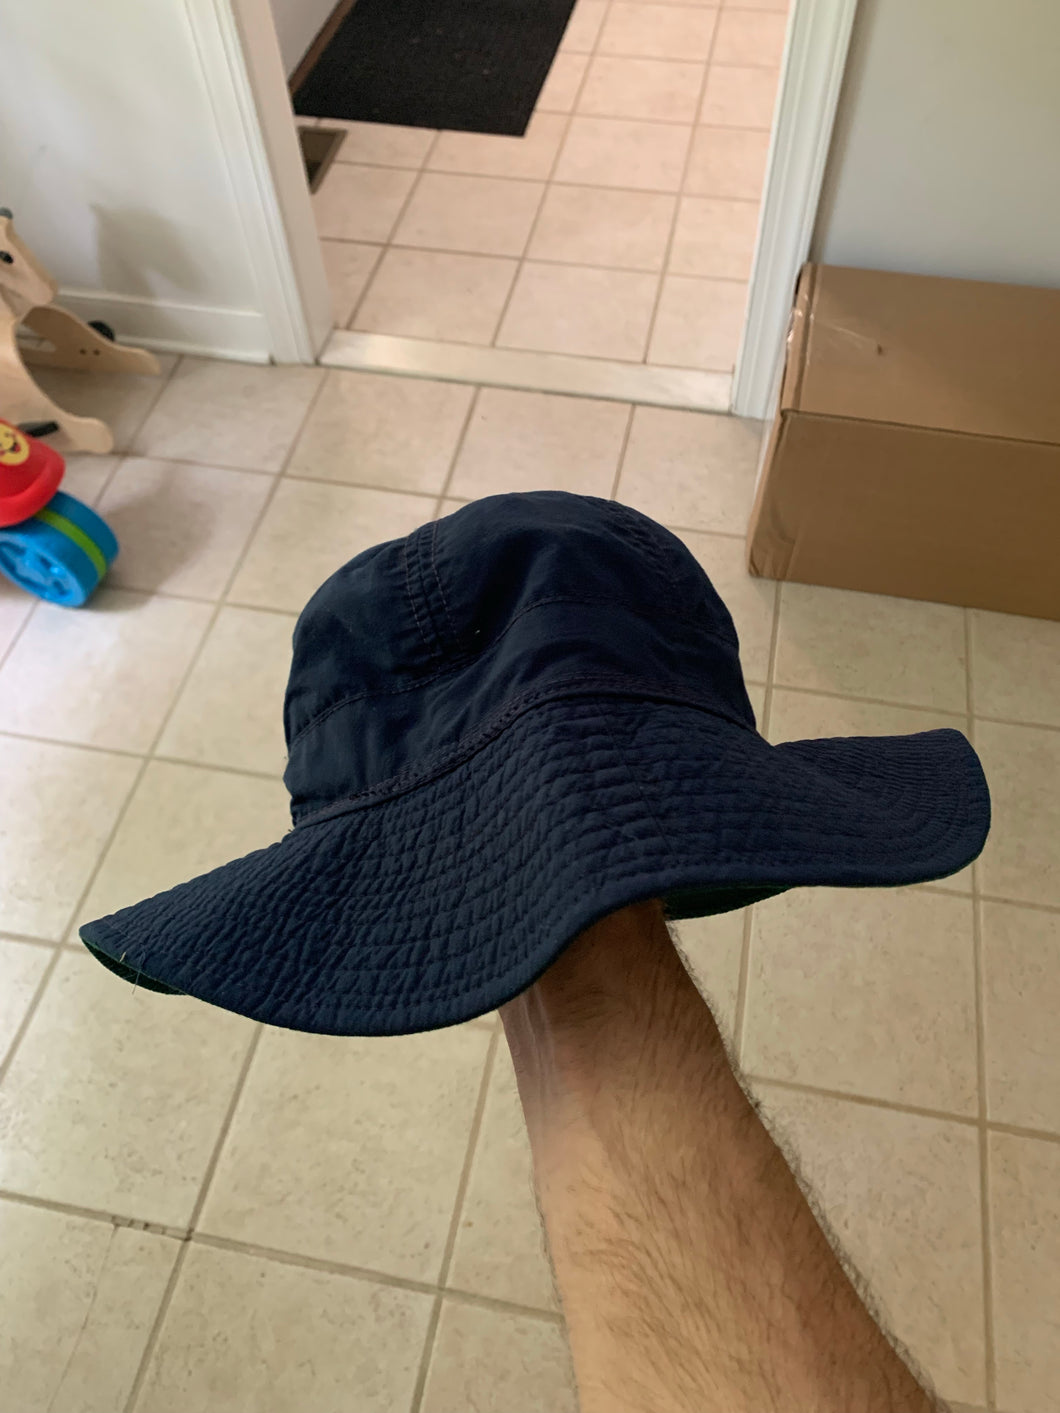 1990s Vintage LL Bean Goretex Bucket Hat - Size L